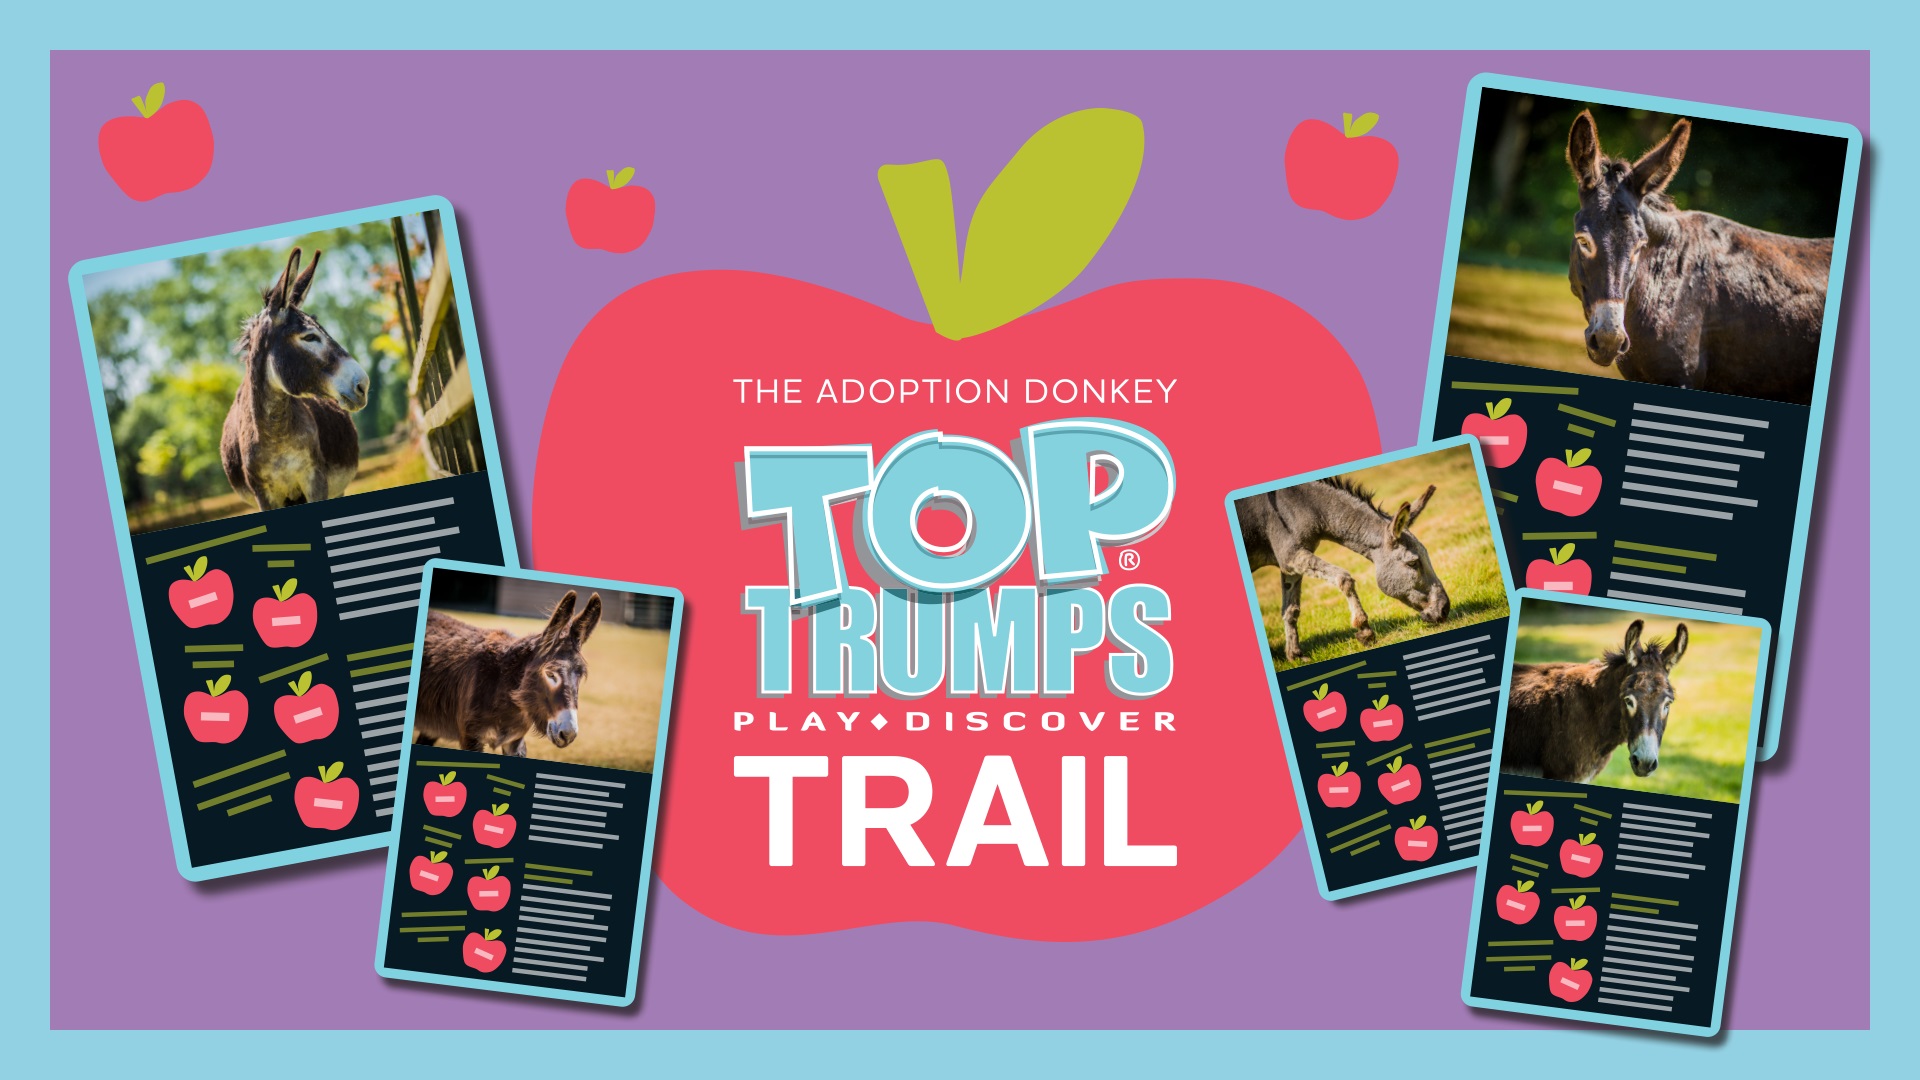 The Adoption Donkey Top Trumps Trail illustration